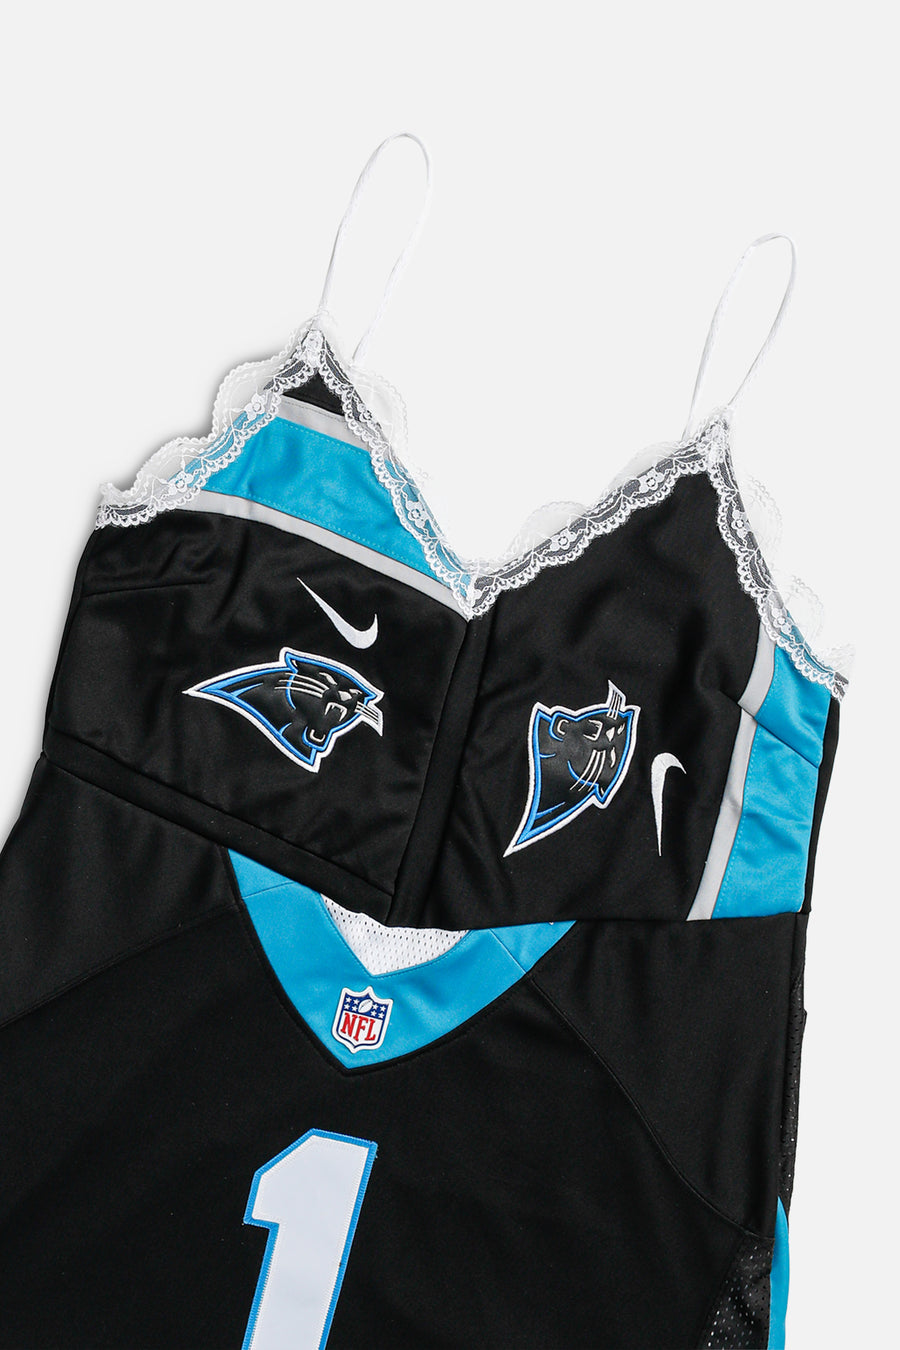 Rework NFL Lace Dress - XL